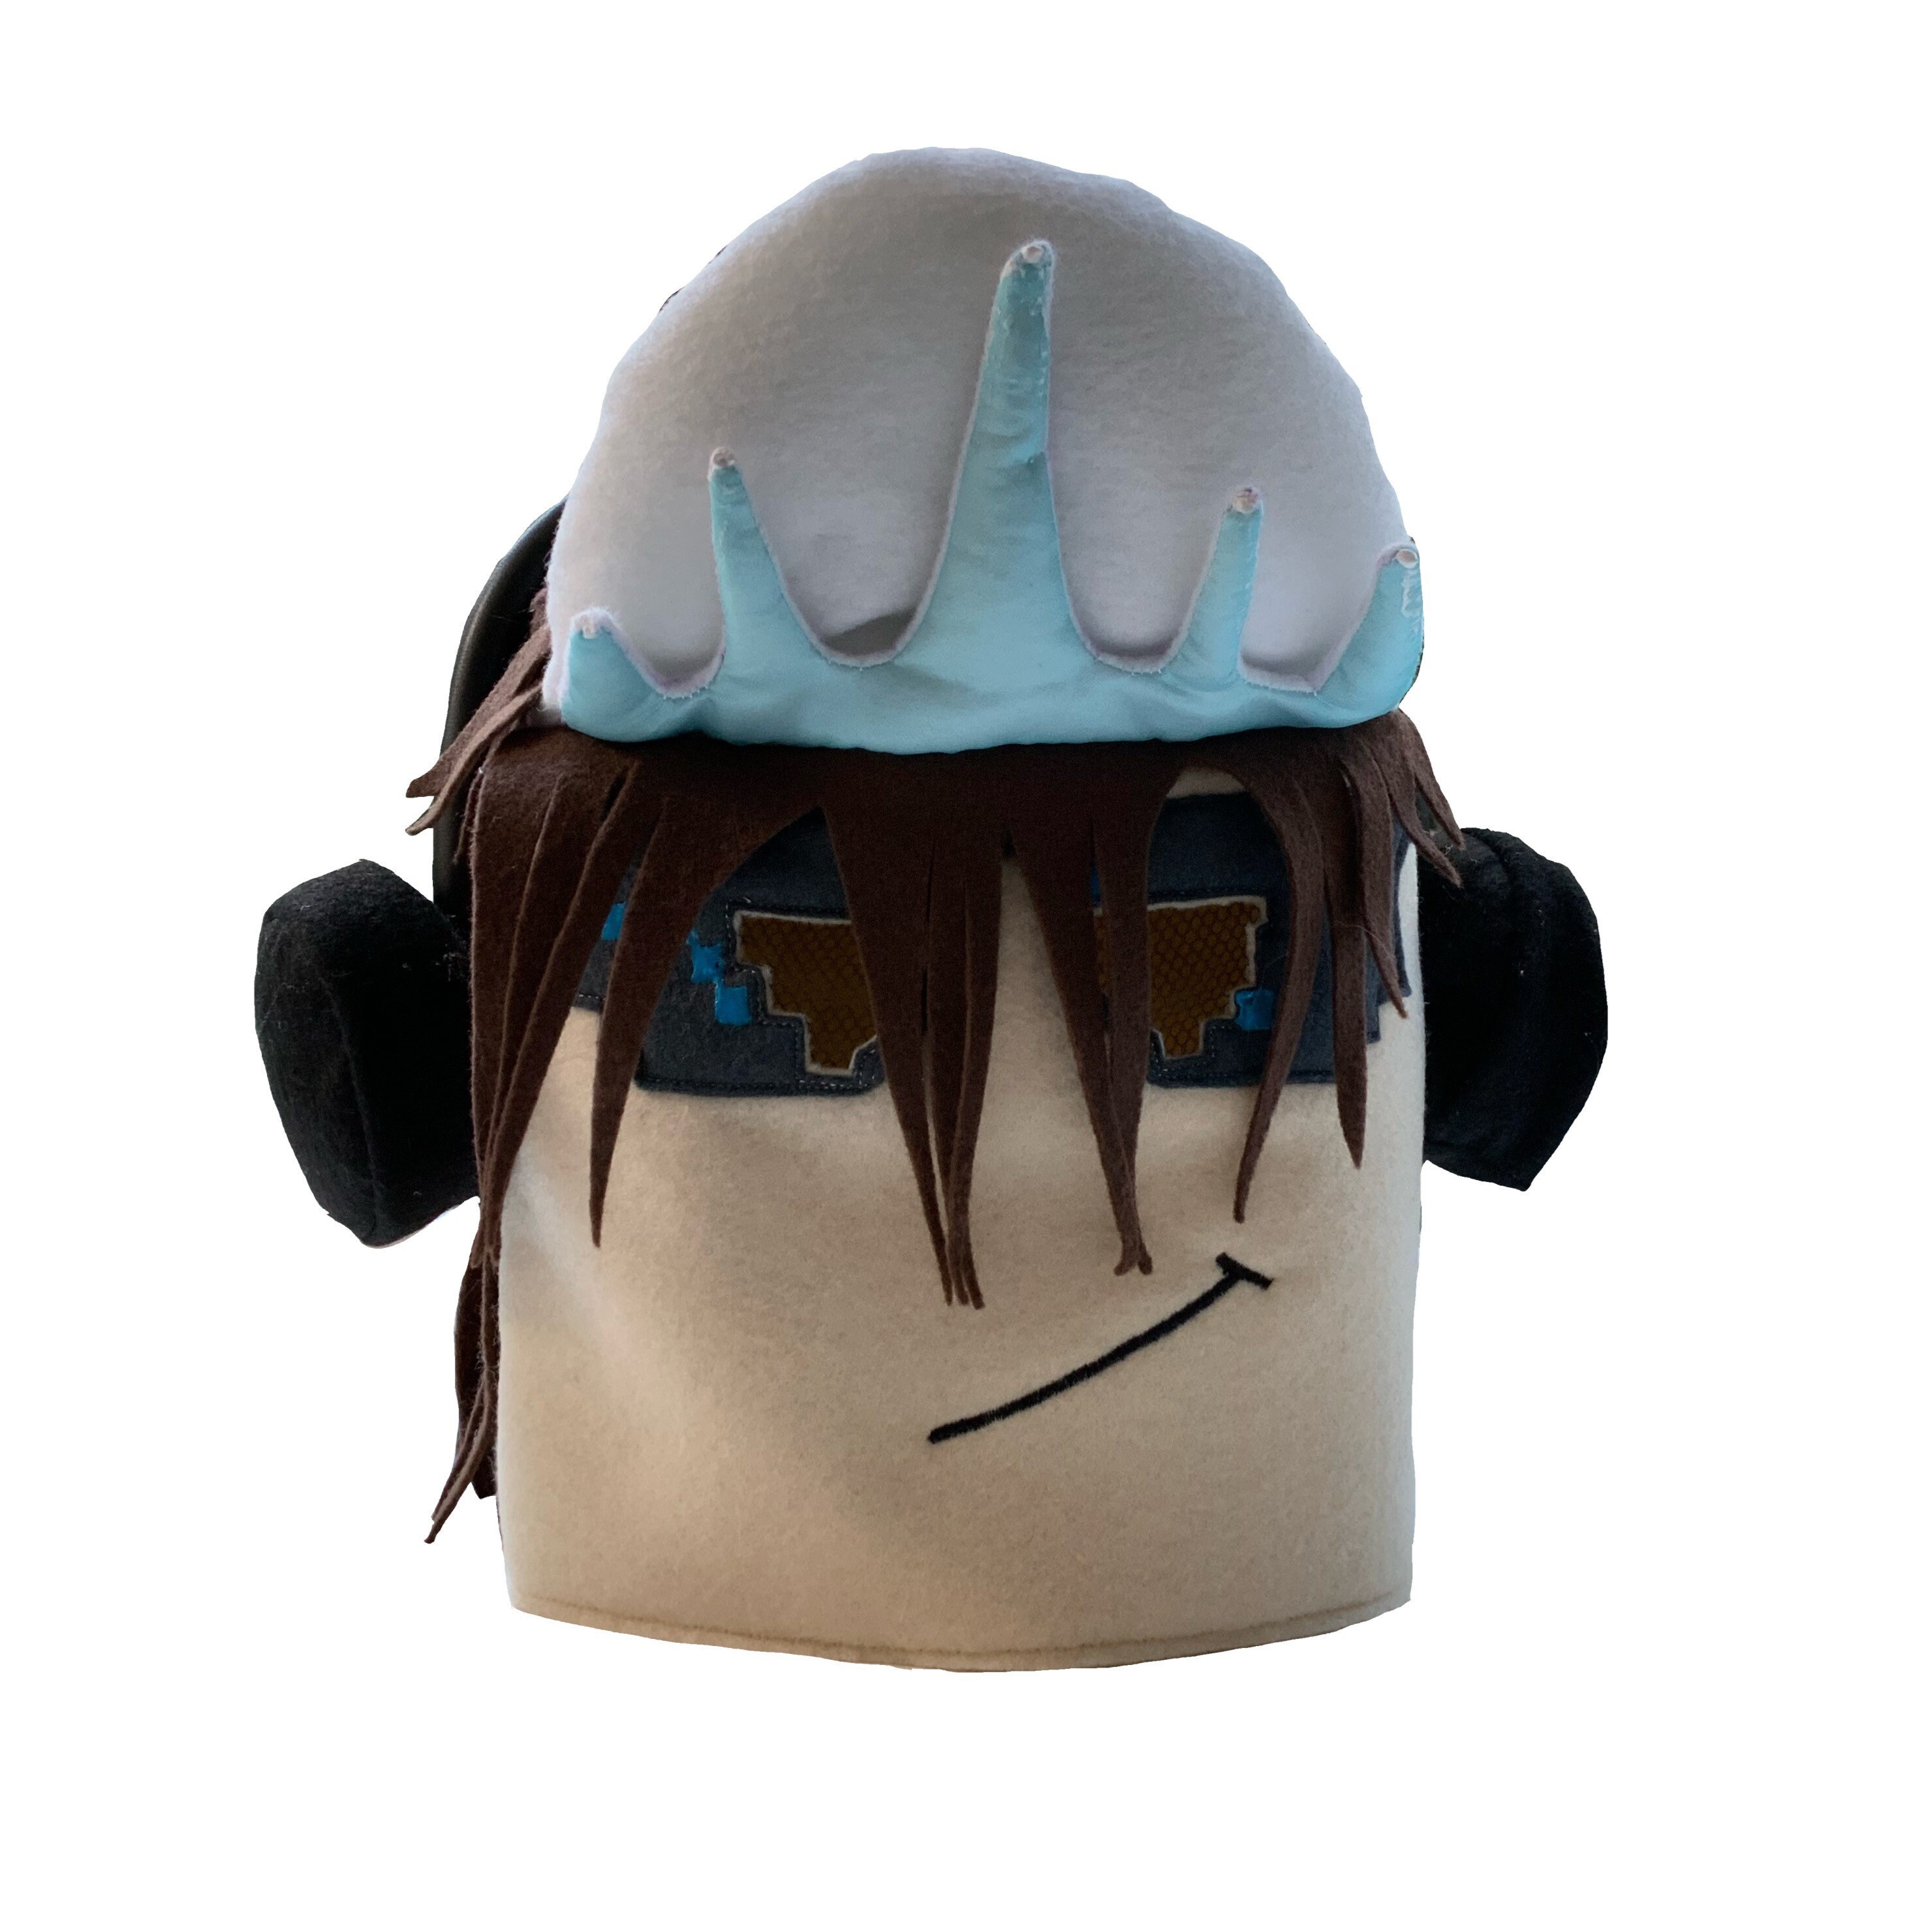 Roblox Head Mask Costume CUSTOM Look Made to Look Just Like 